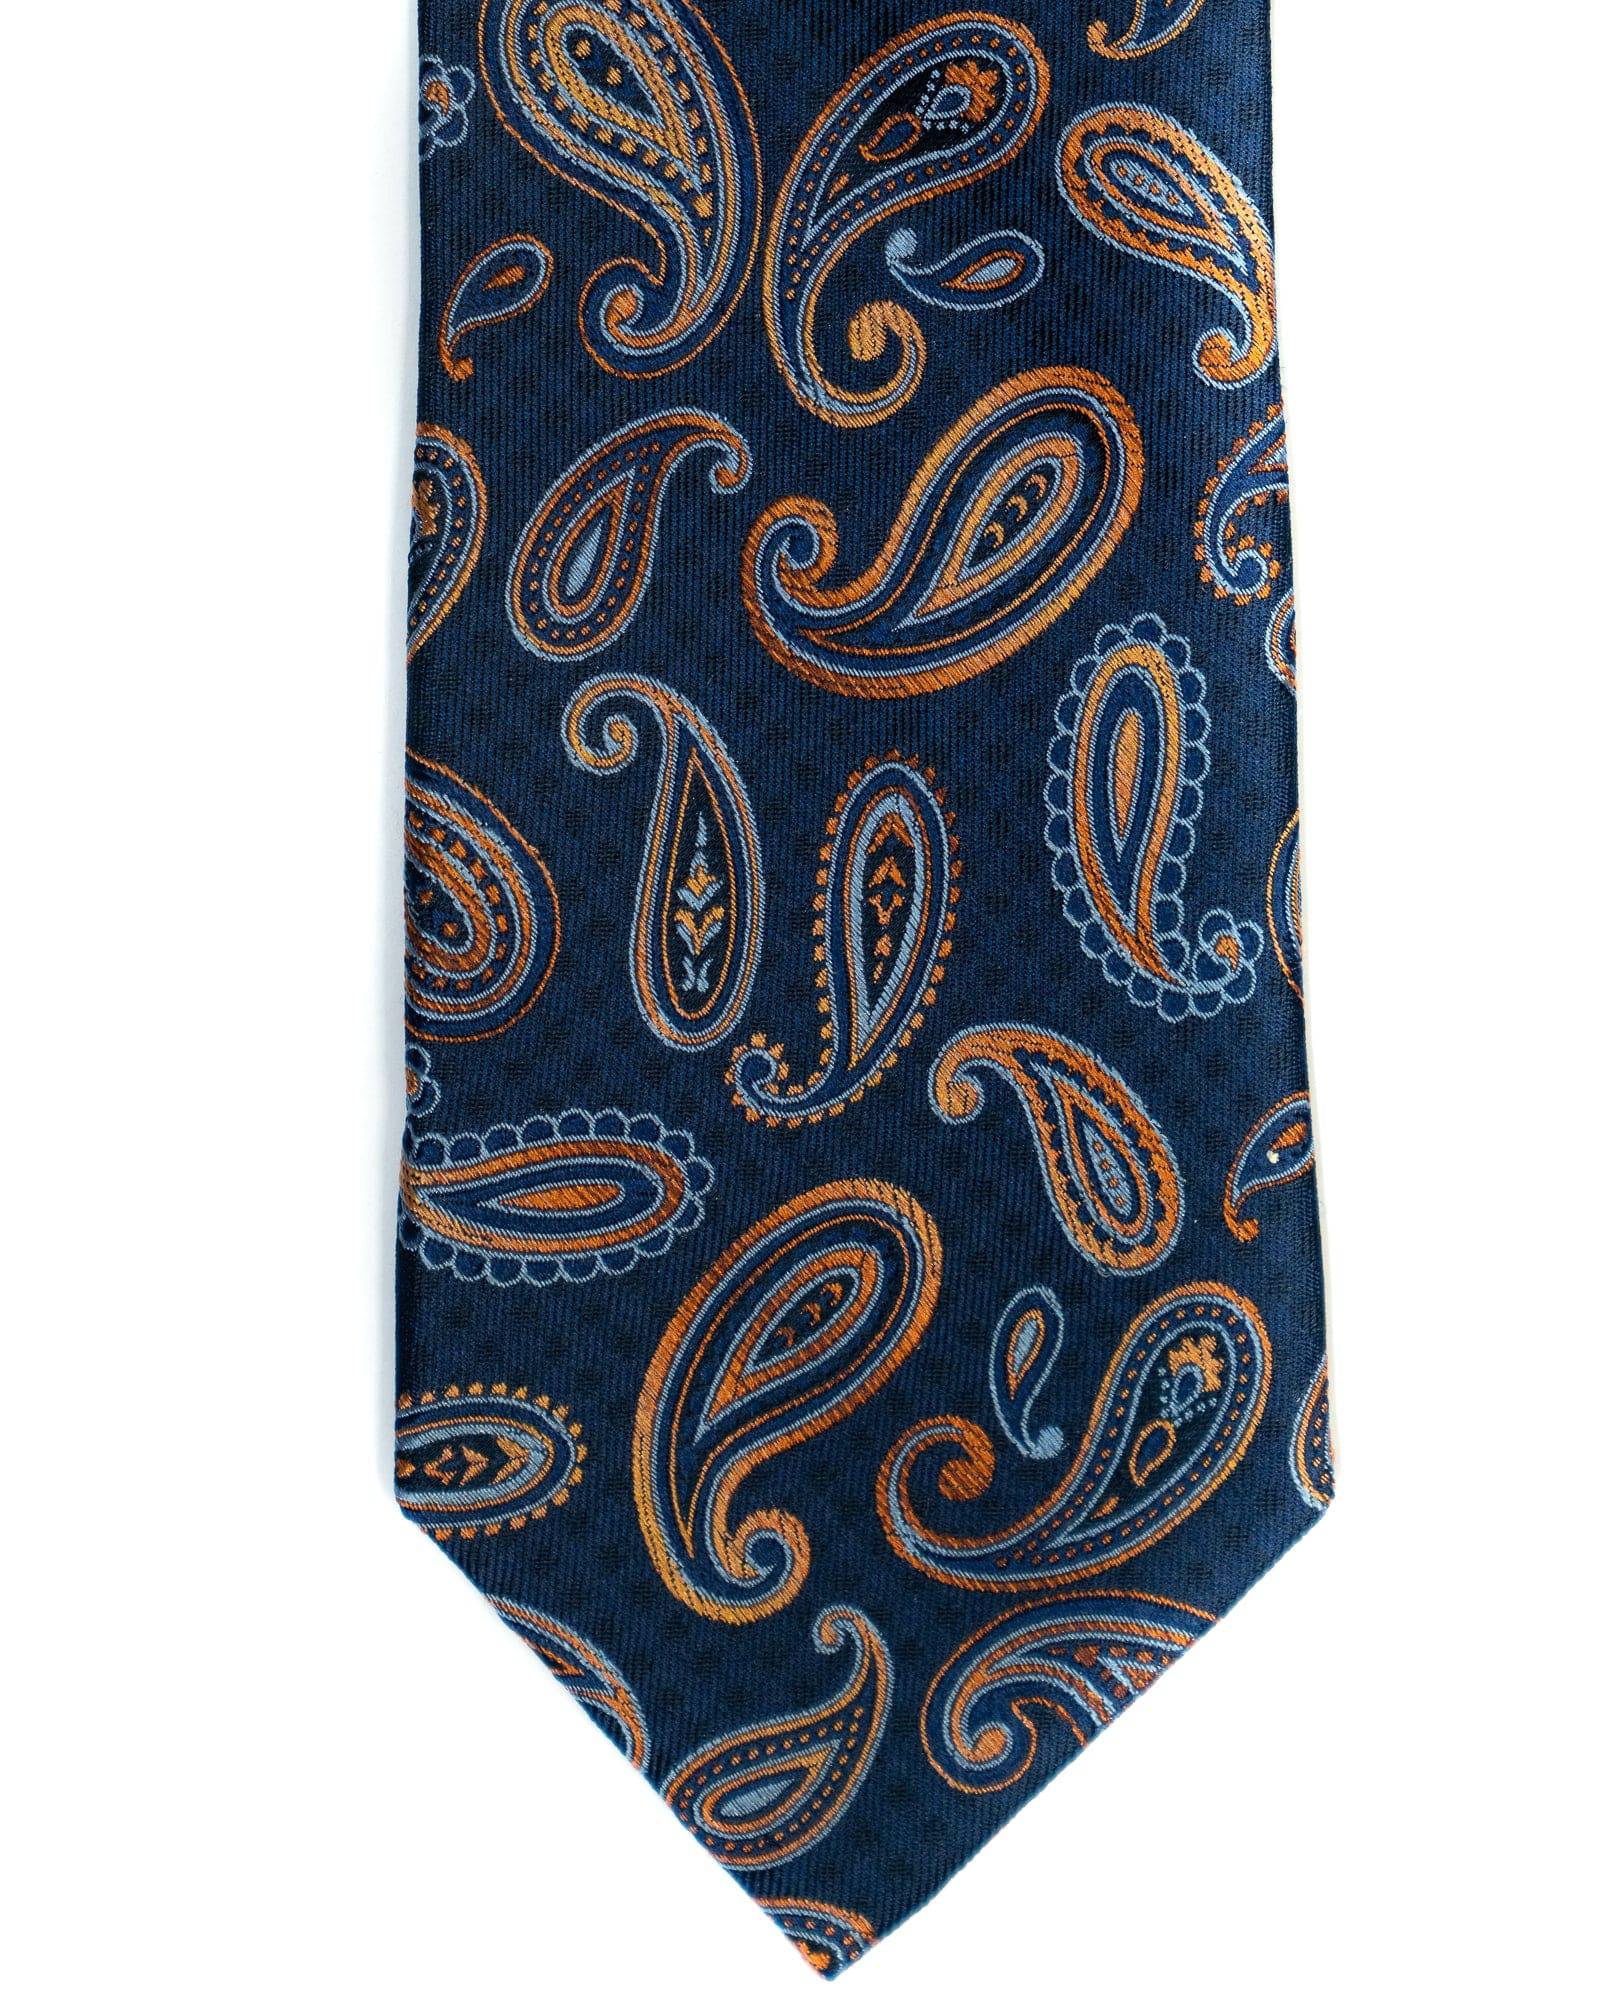 Paisley Silk Tie in Navy With Orange - Rainwater's Men's Clothing and Tuxedo Rental